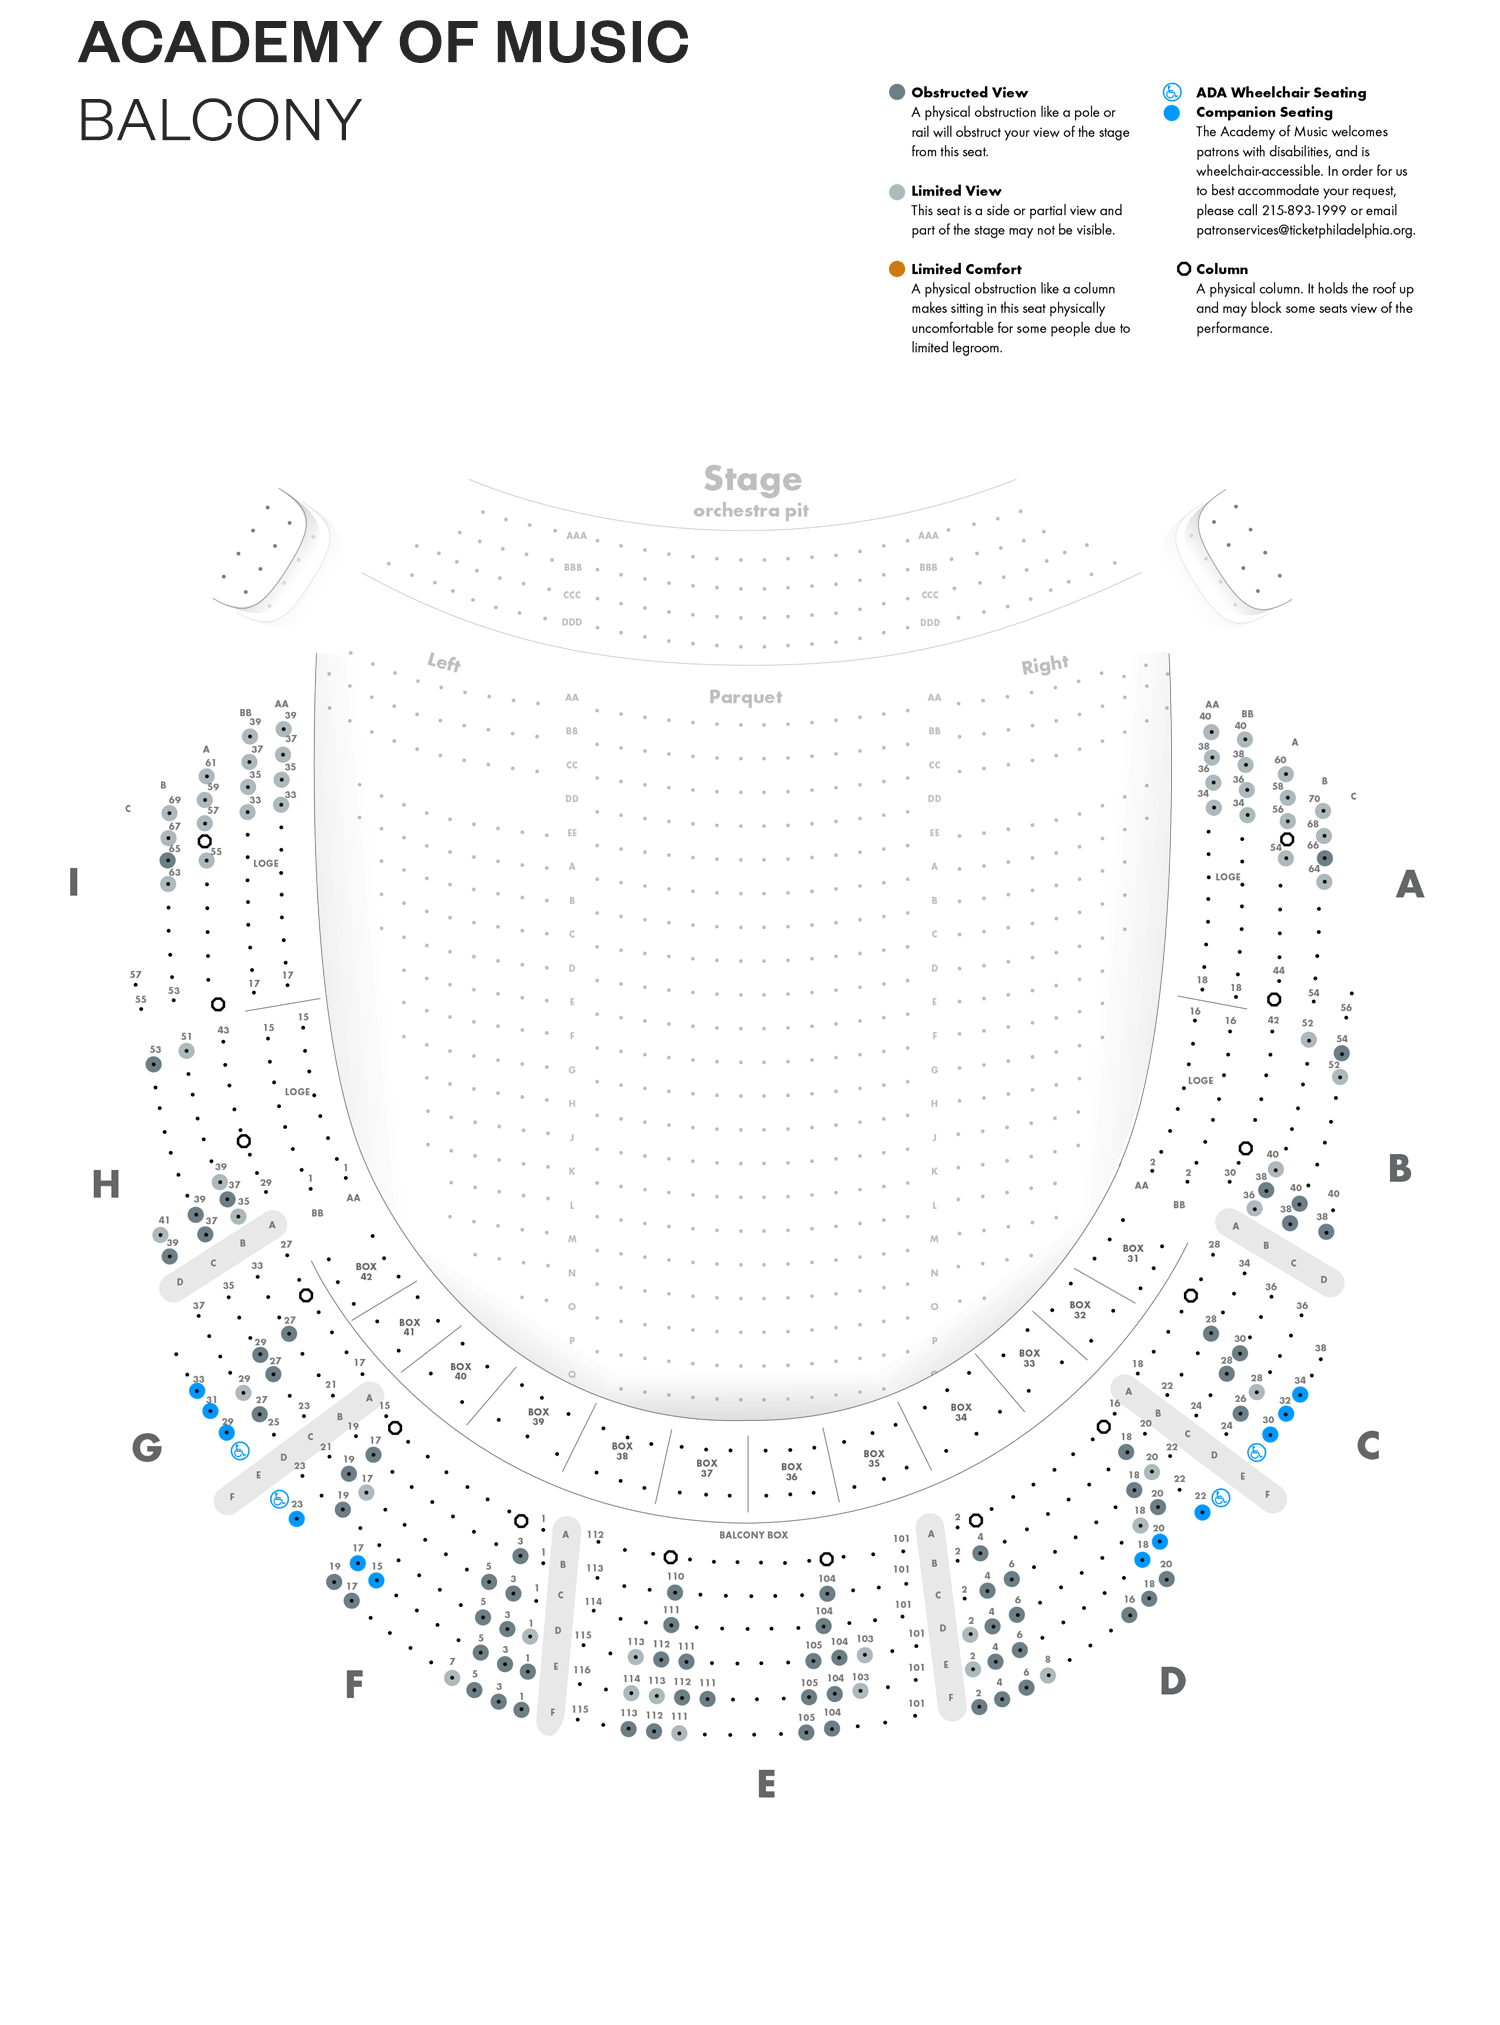 Academy of Music Broadway Balcony  Seating Chart